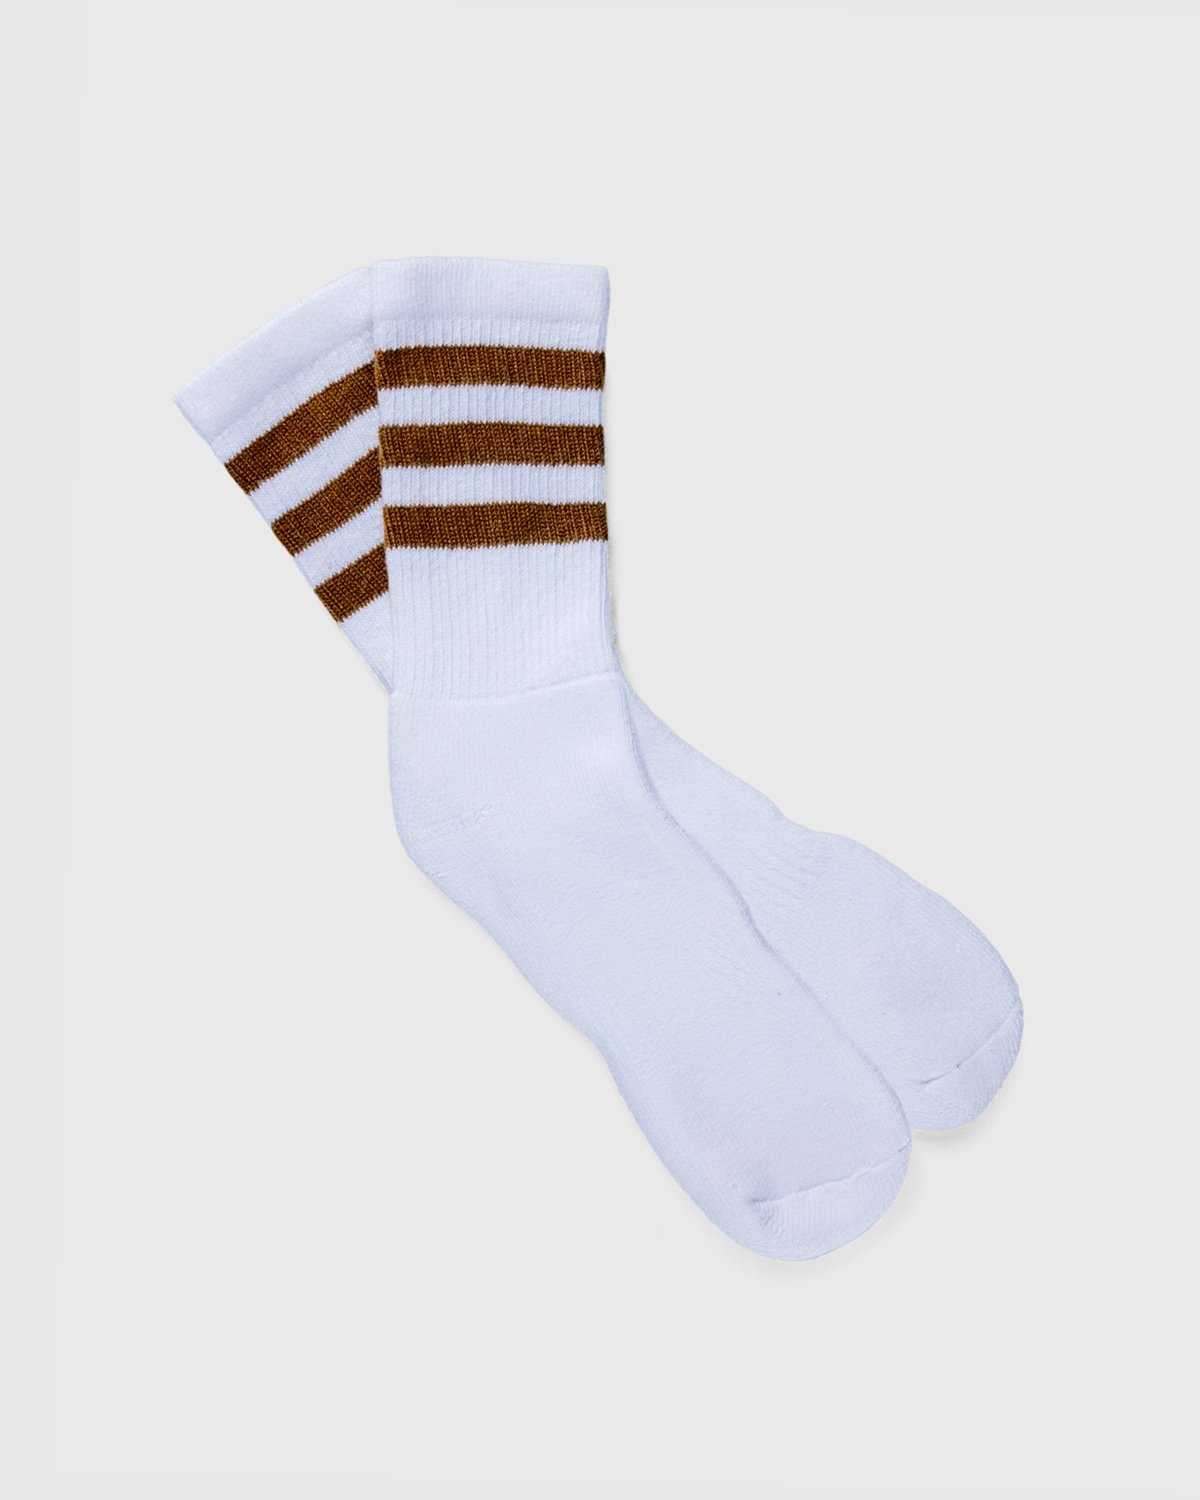 Darryl Brown – Sock Set Multicolour - Crew - Multi - Image 4